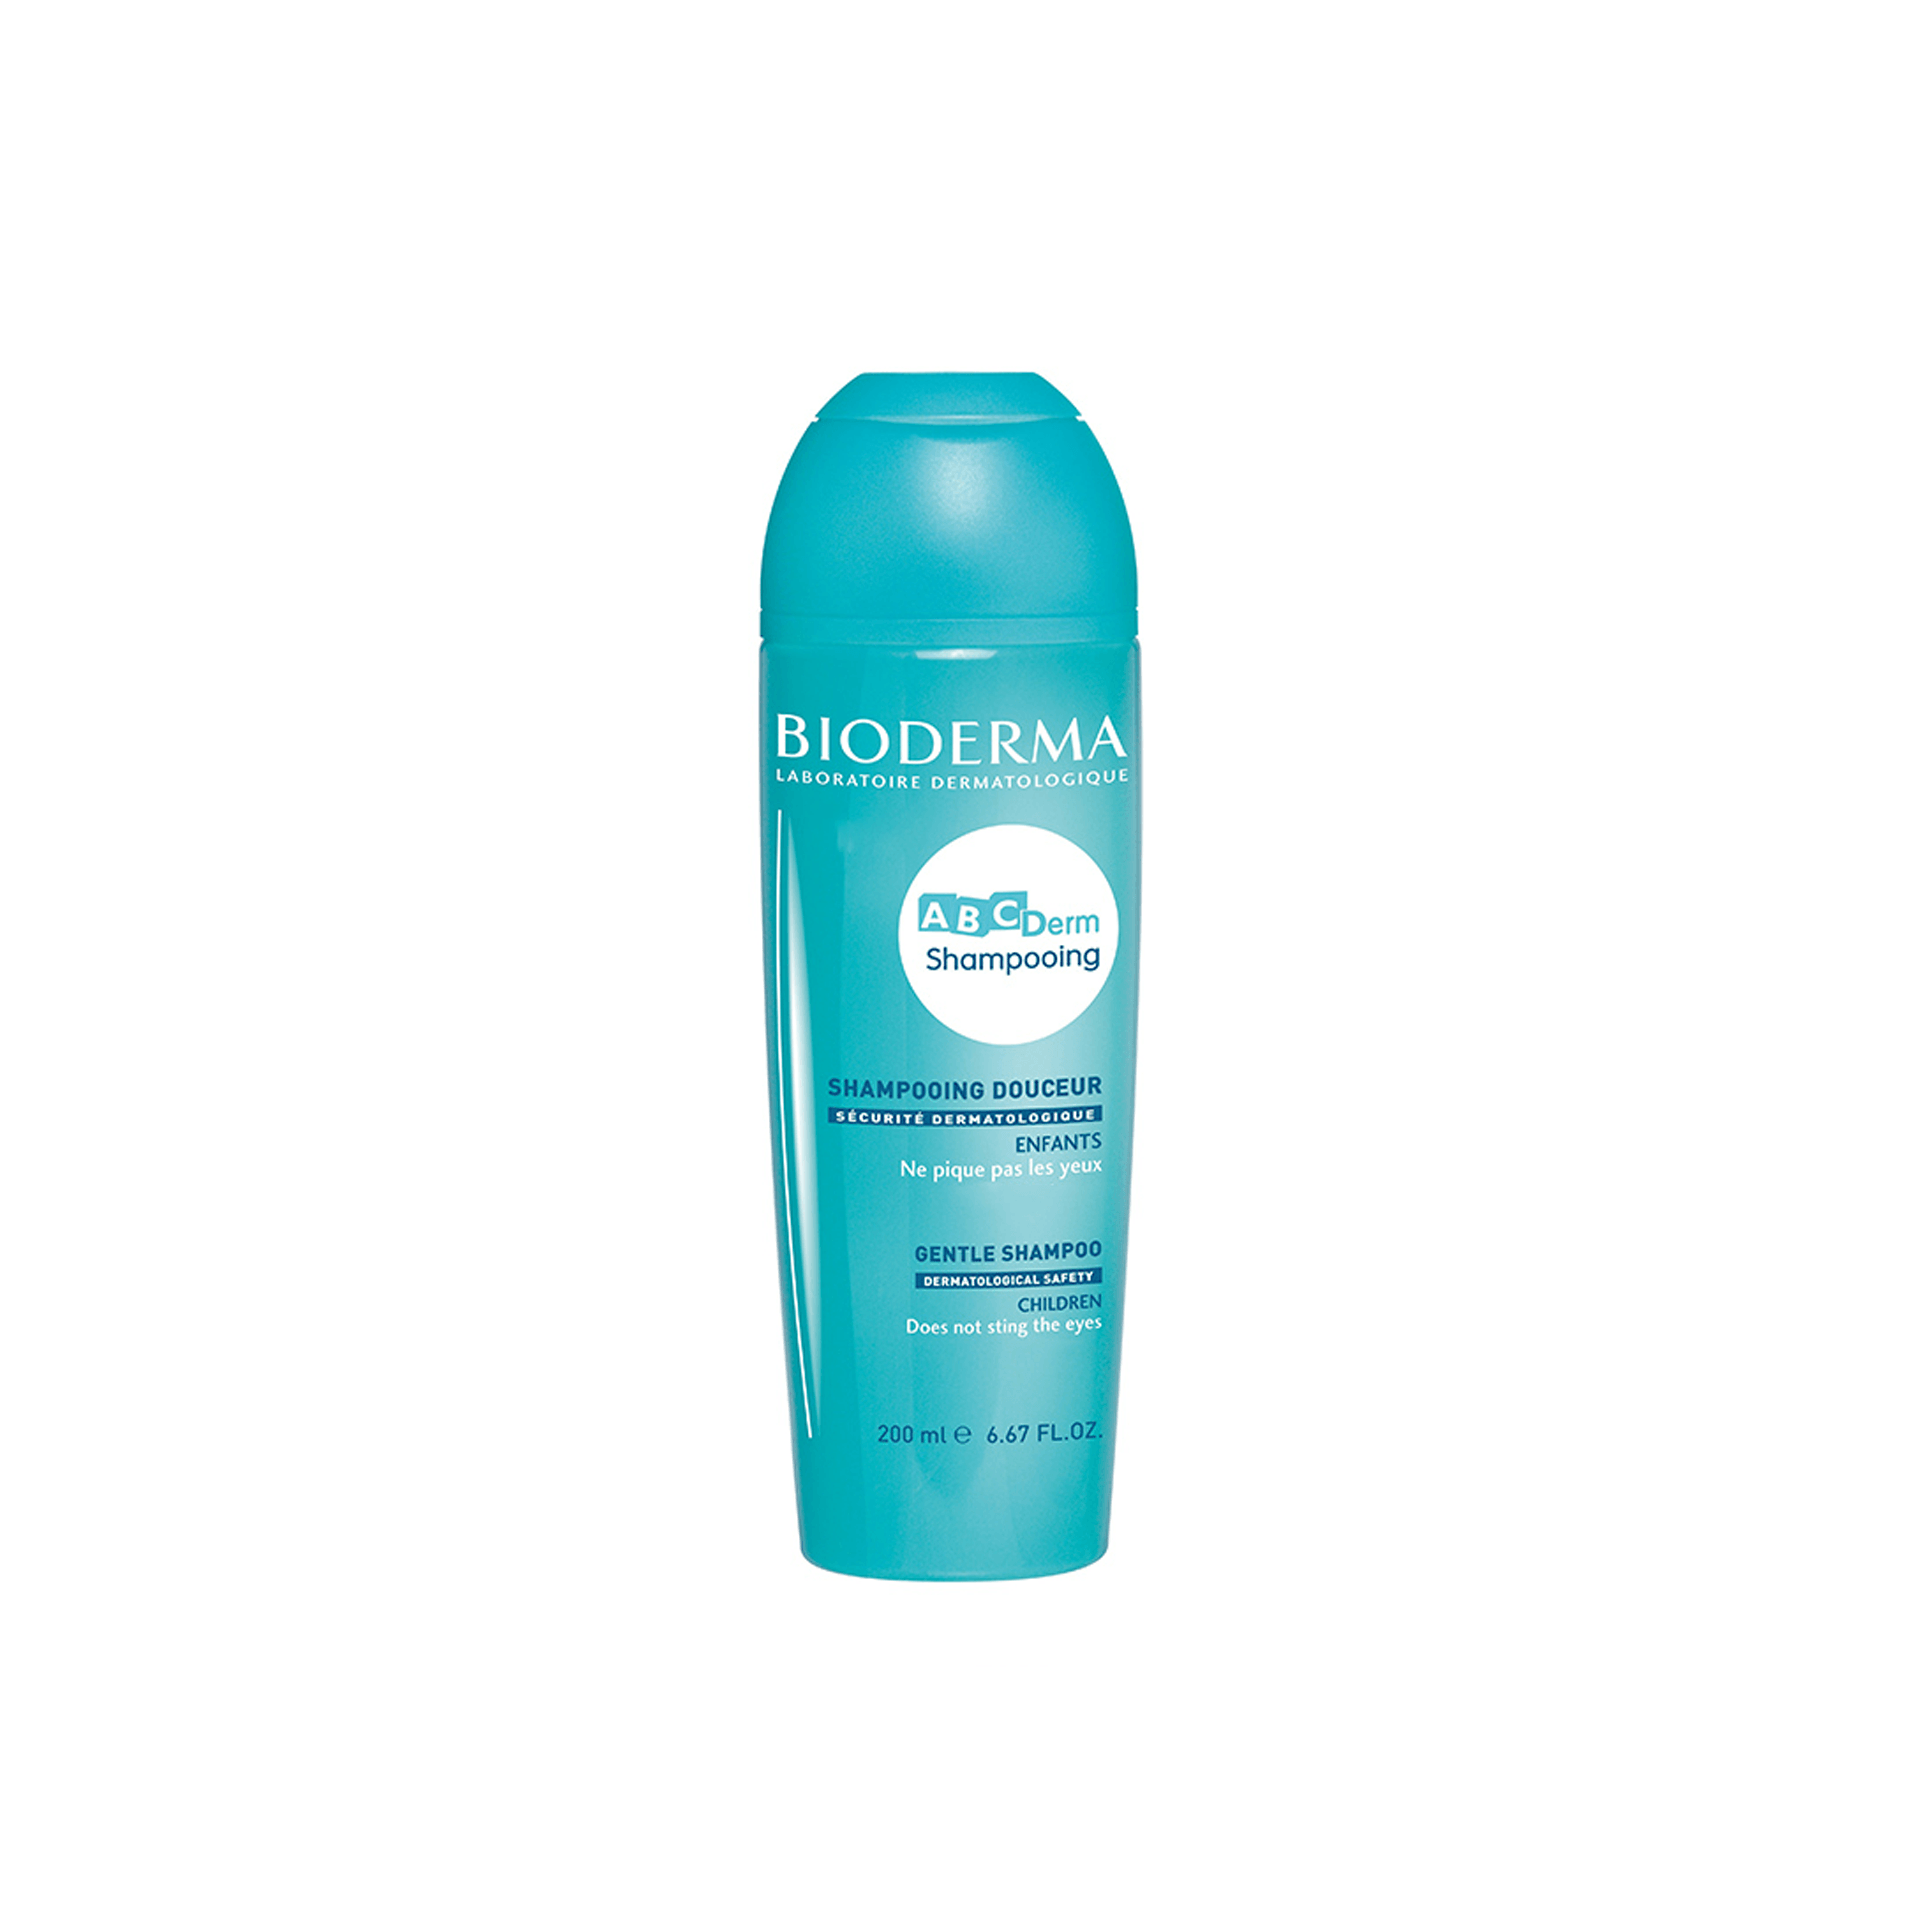 Bioderma Abcderm Gentle Shampoo 200mL